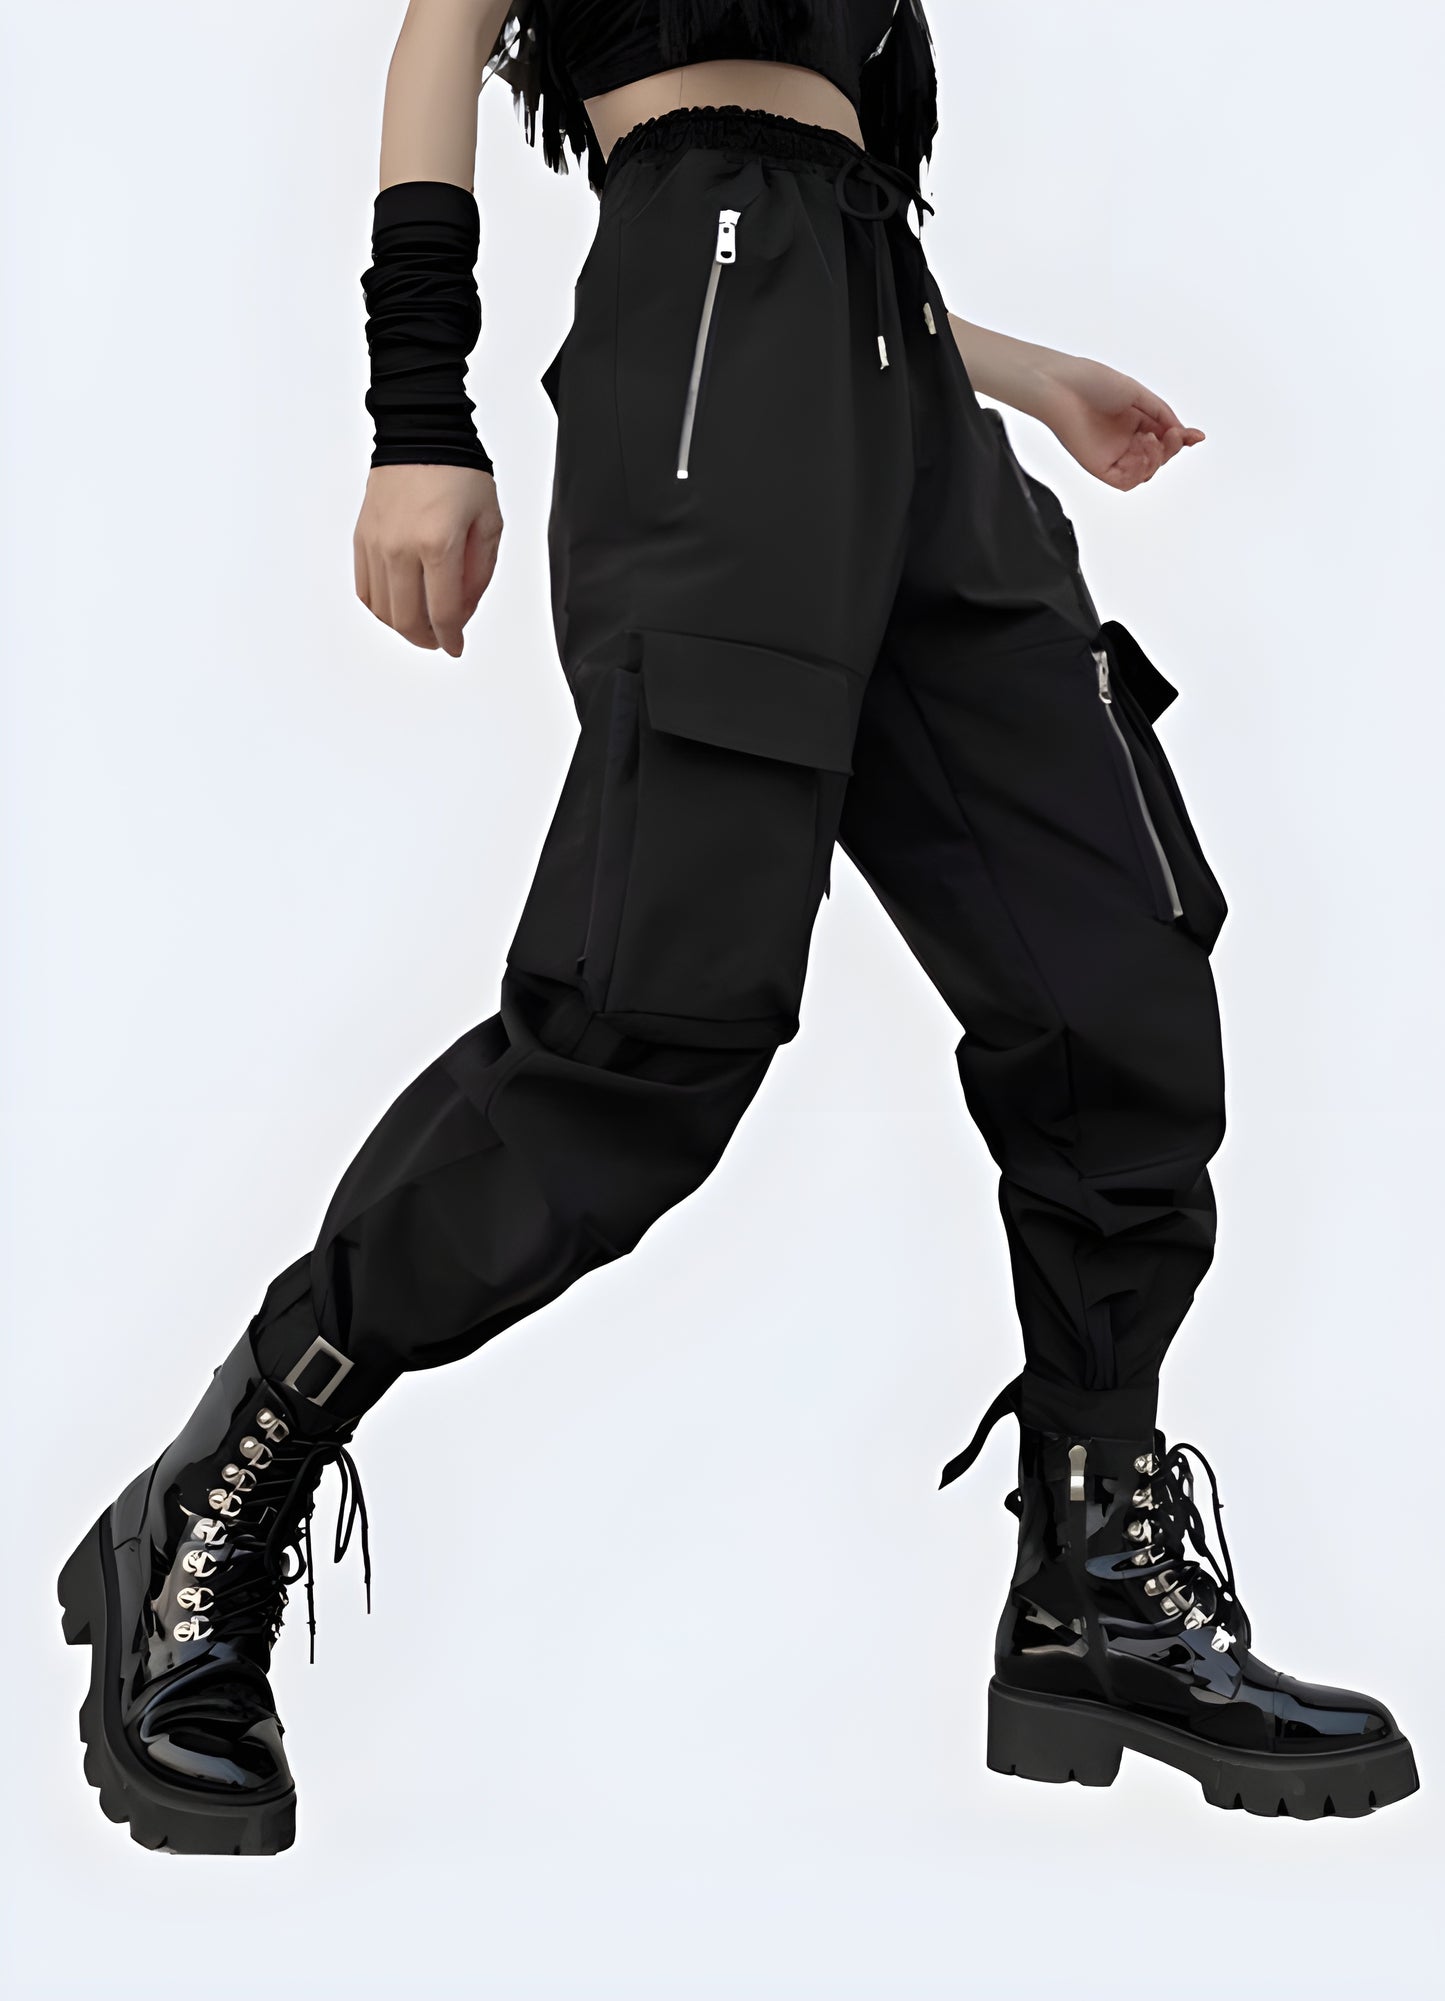 These versatile pants feature zipper pockets that add a futuristic.